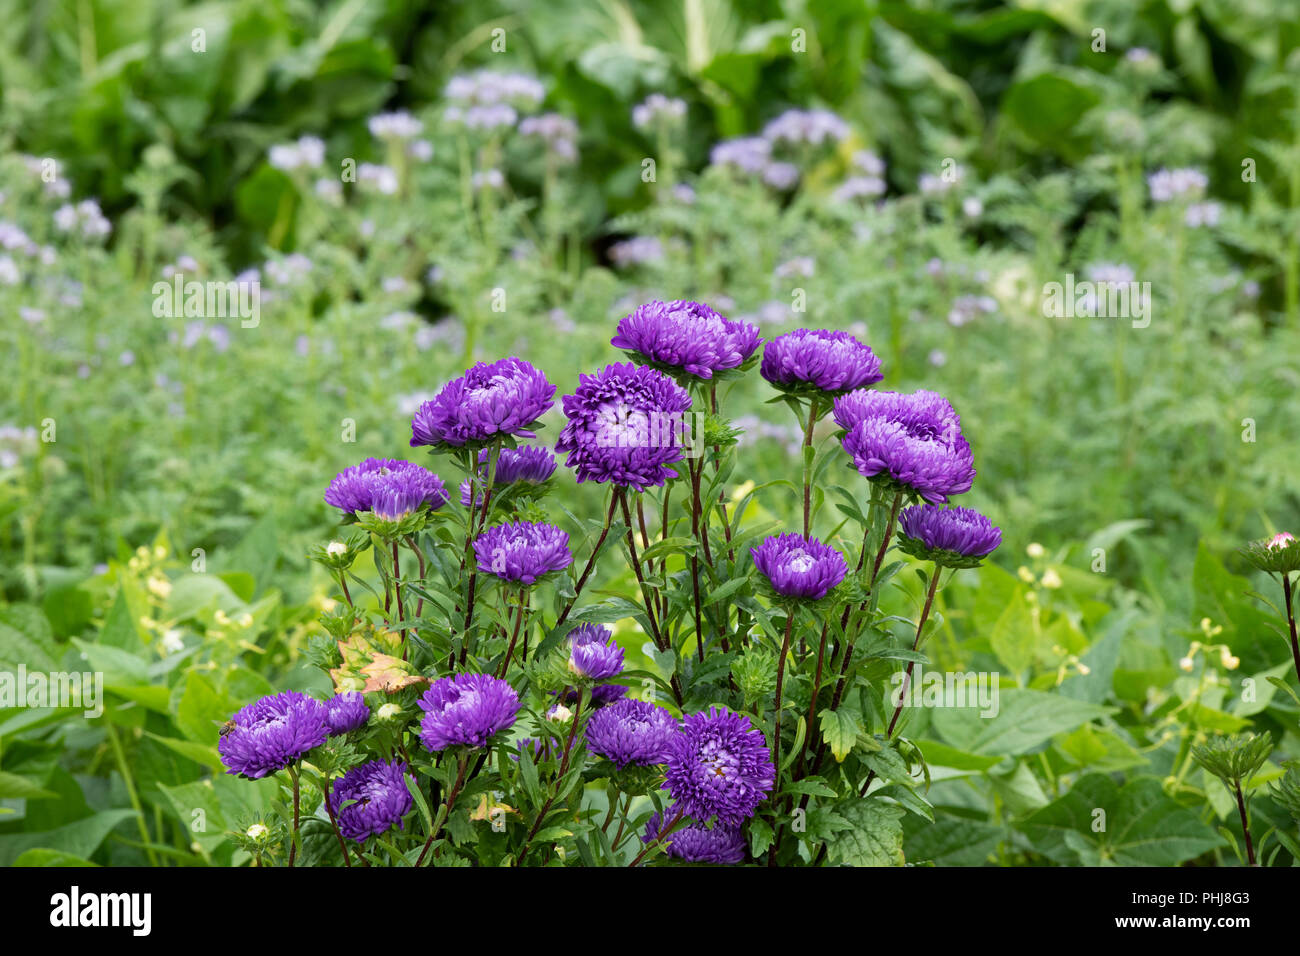 Callistephus chinensis. Aster ‘Duchess mixed’ flowers in an English garden border Stock Photo